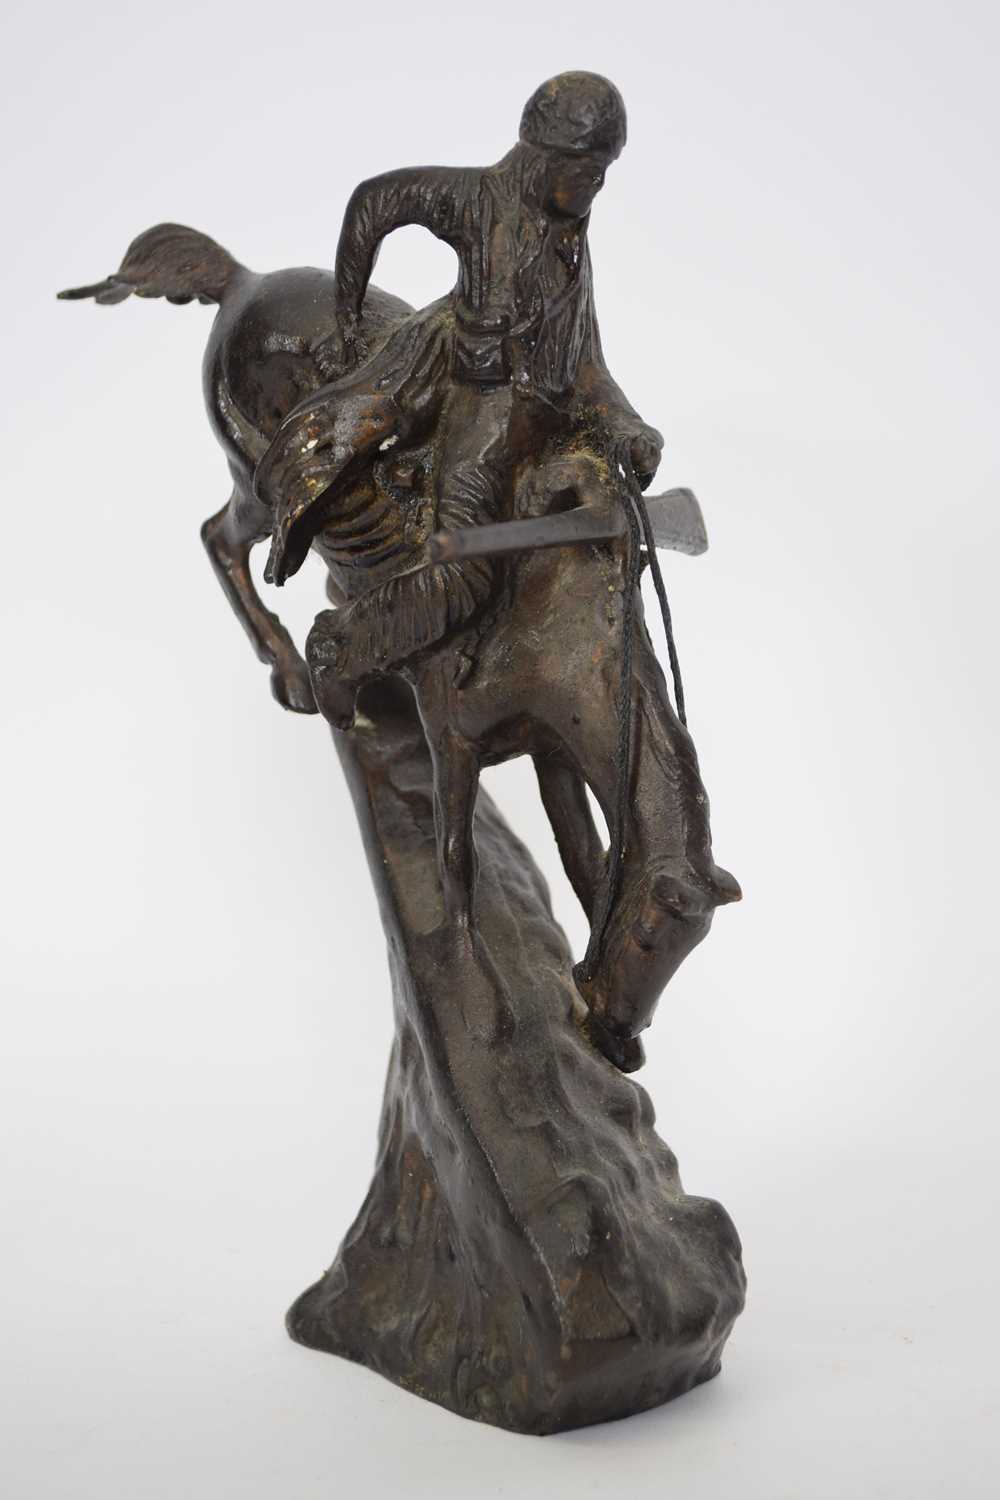 Contemporary hollow bronze model of a Native American on horseback, 21cm high